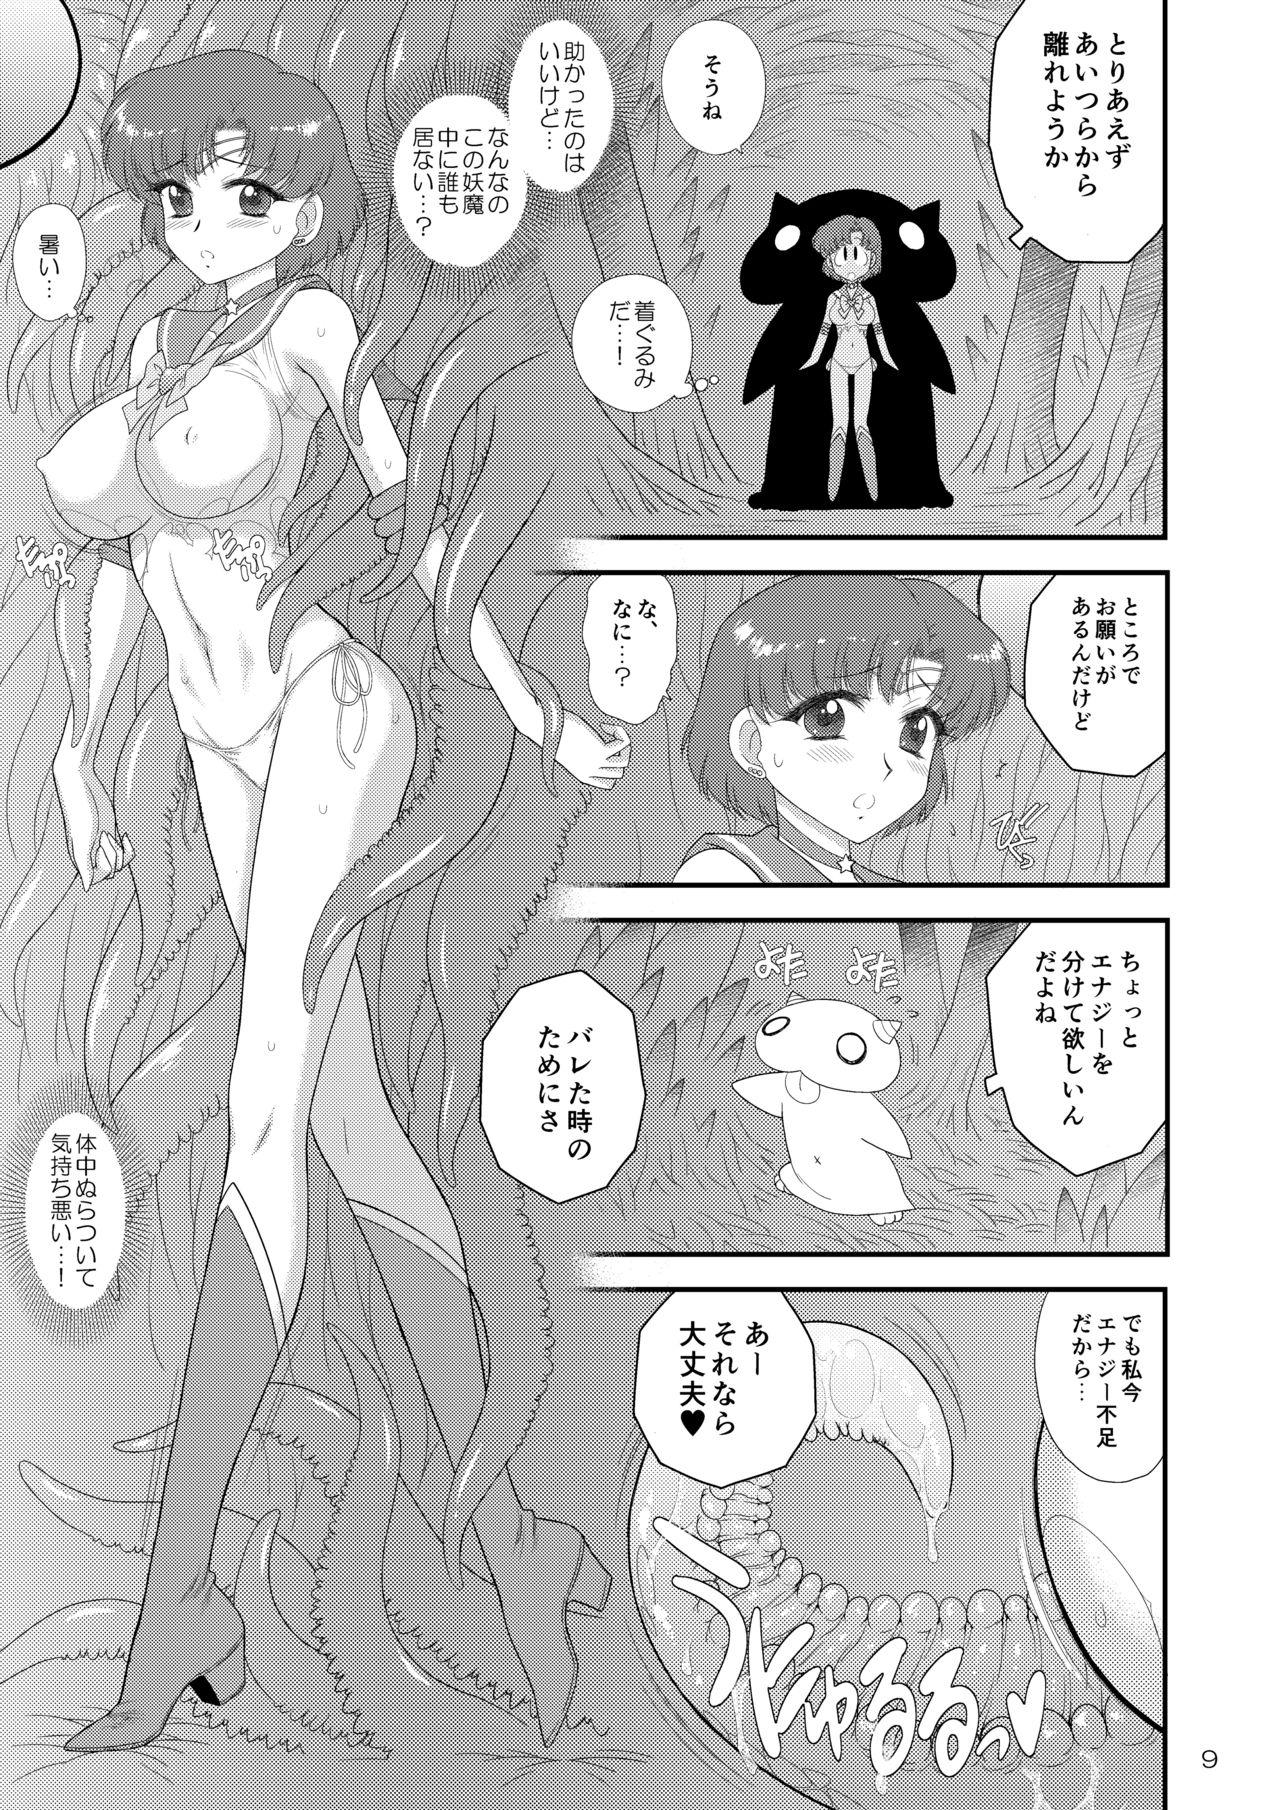 Asses Kigurumi no Naka wa Massakari - Sailor moon Good - Page 9